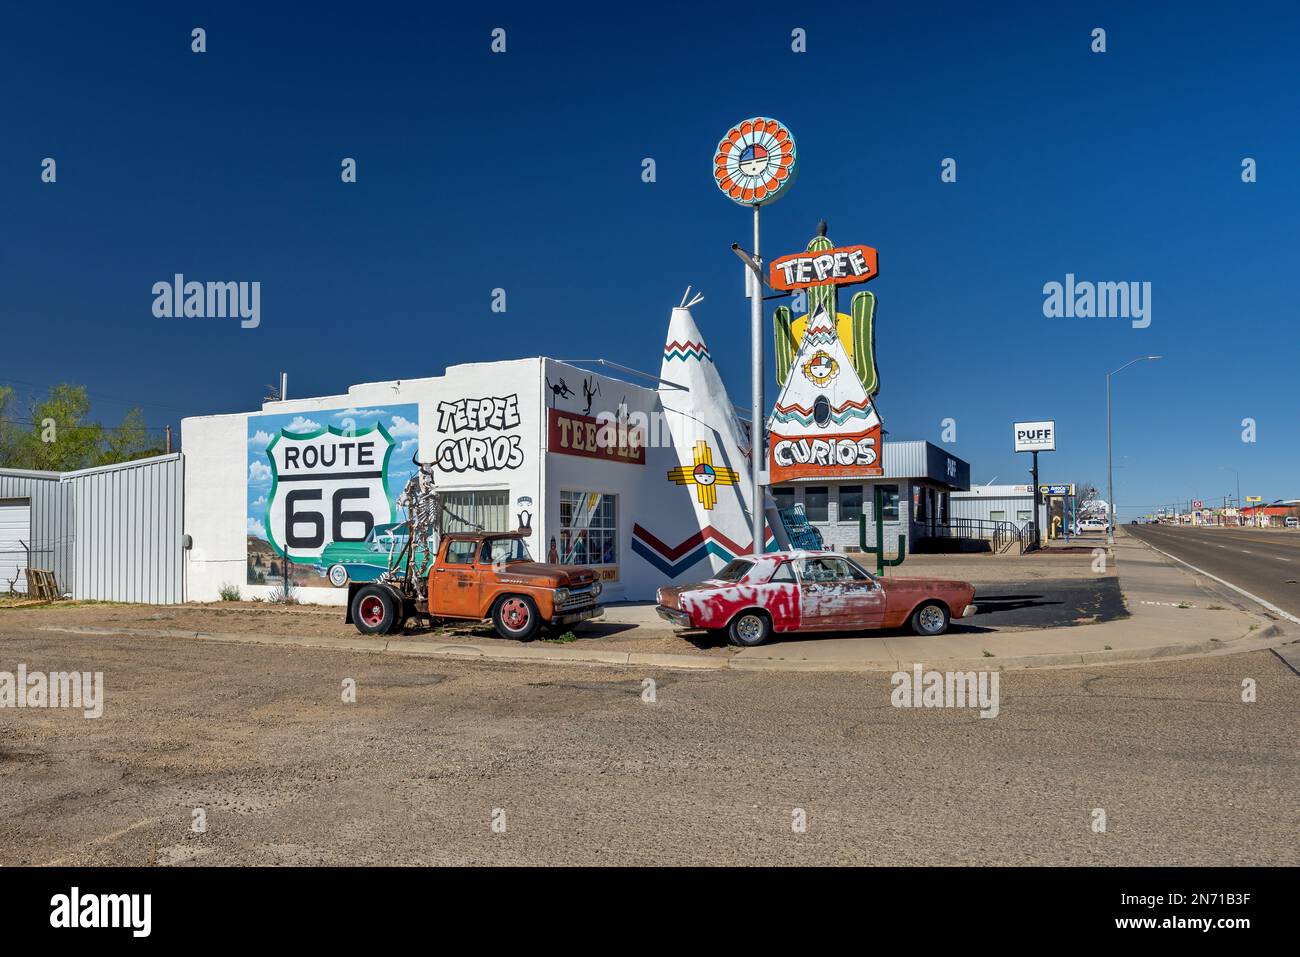 The Teepee, Tucumcari, Route 66, America, USA Foto Stock